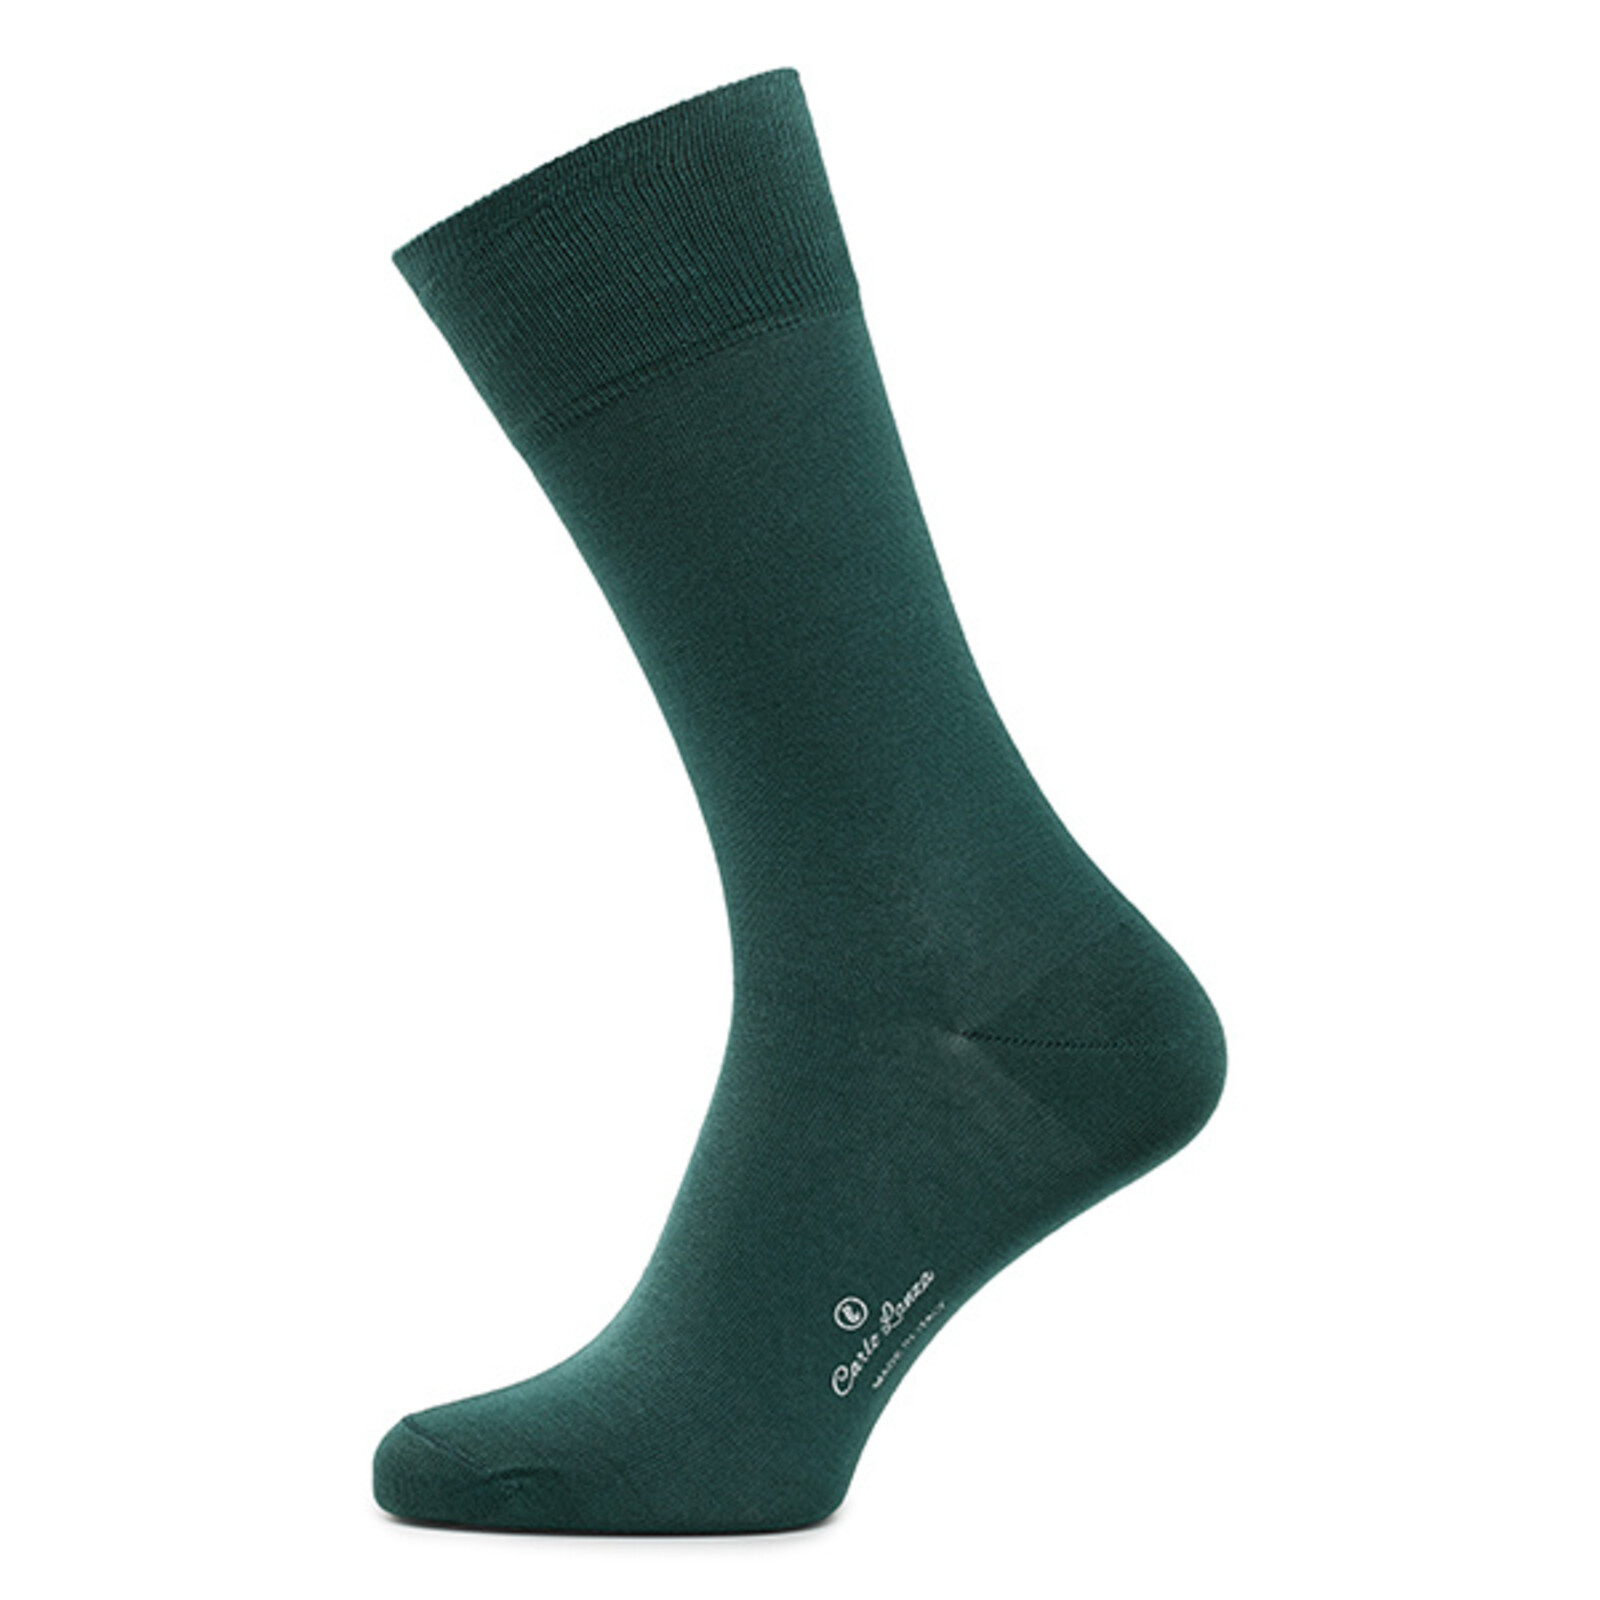 Carlo Lanza Green cotton socks